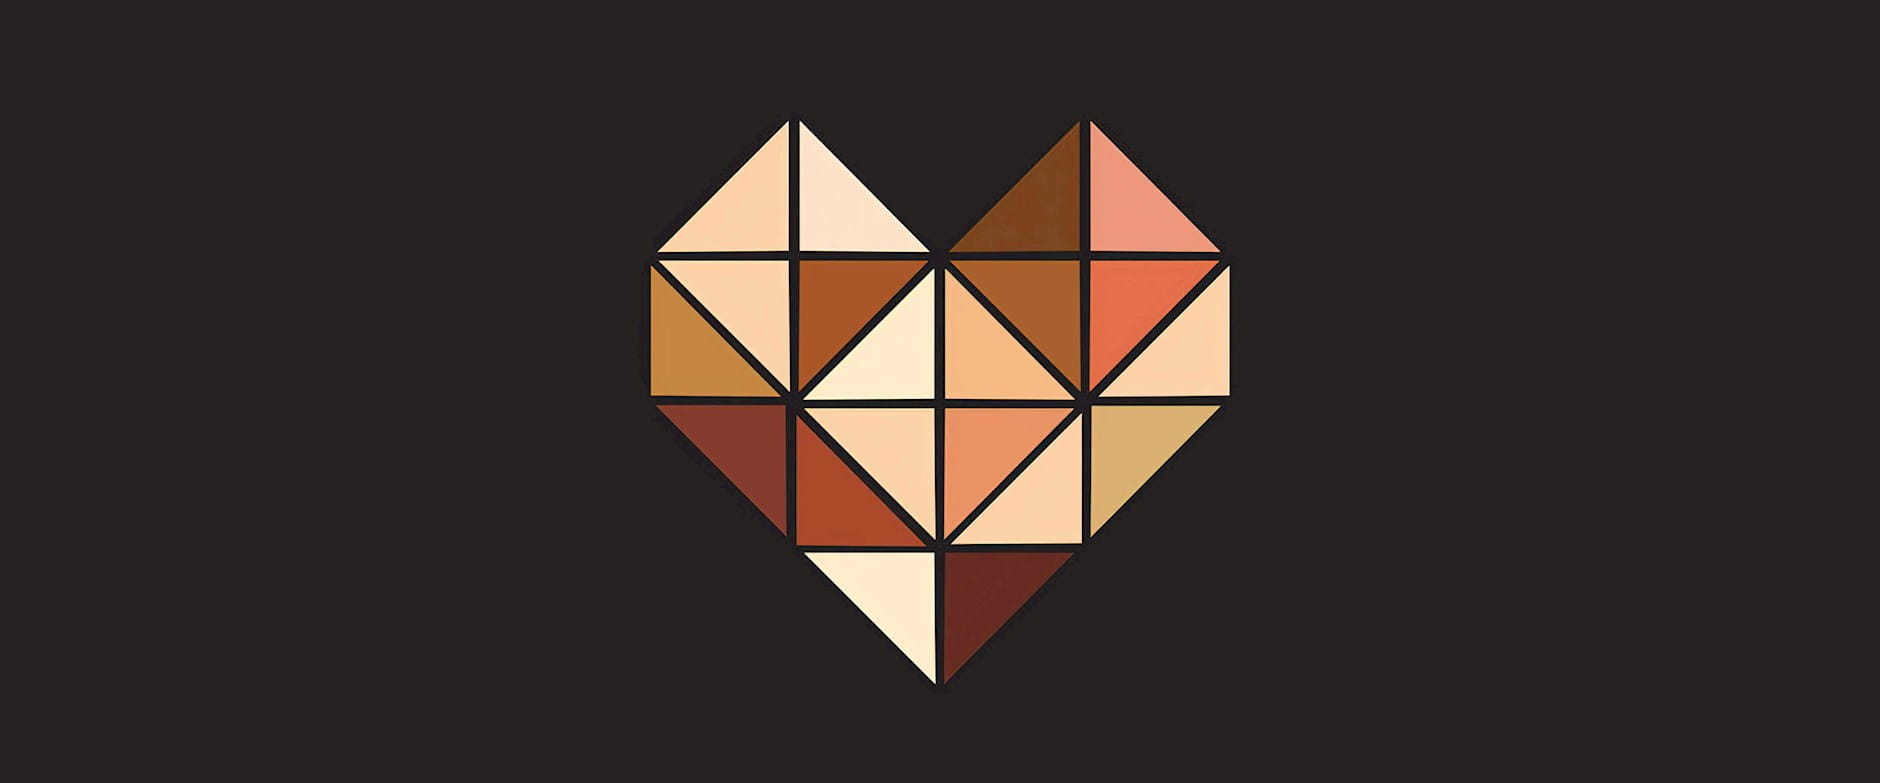 Geometric heart comprised of multi colored triangles